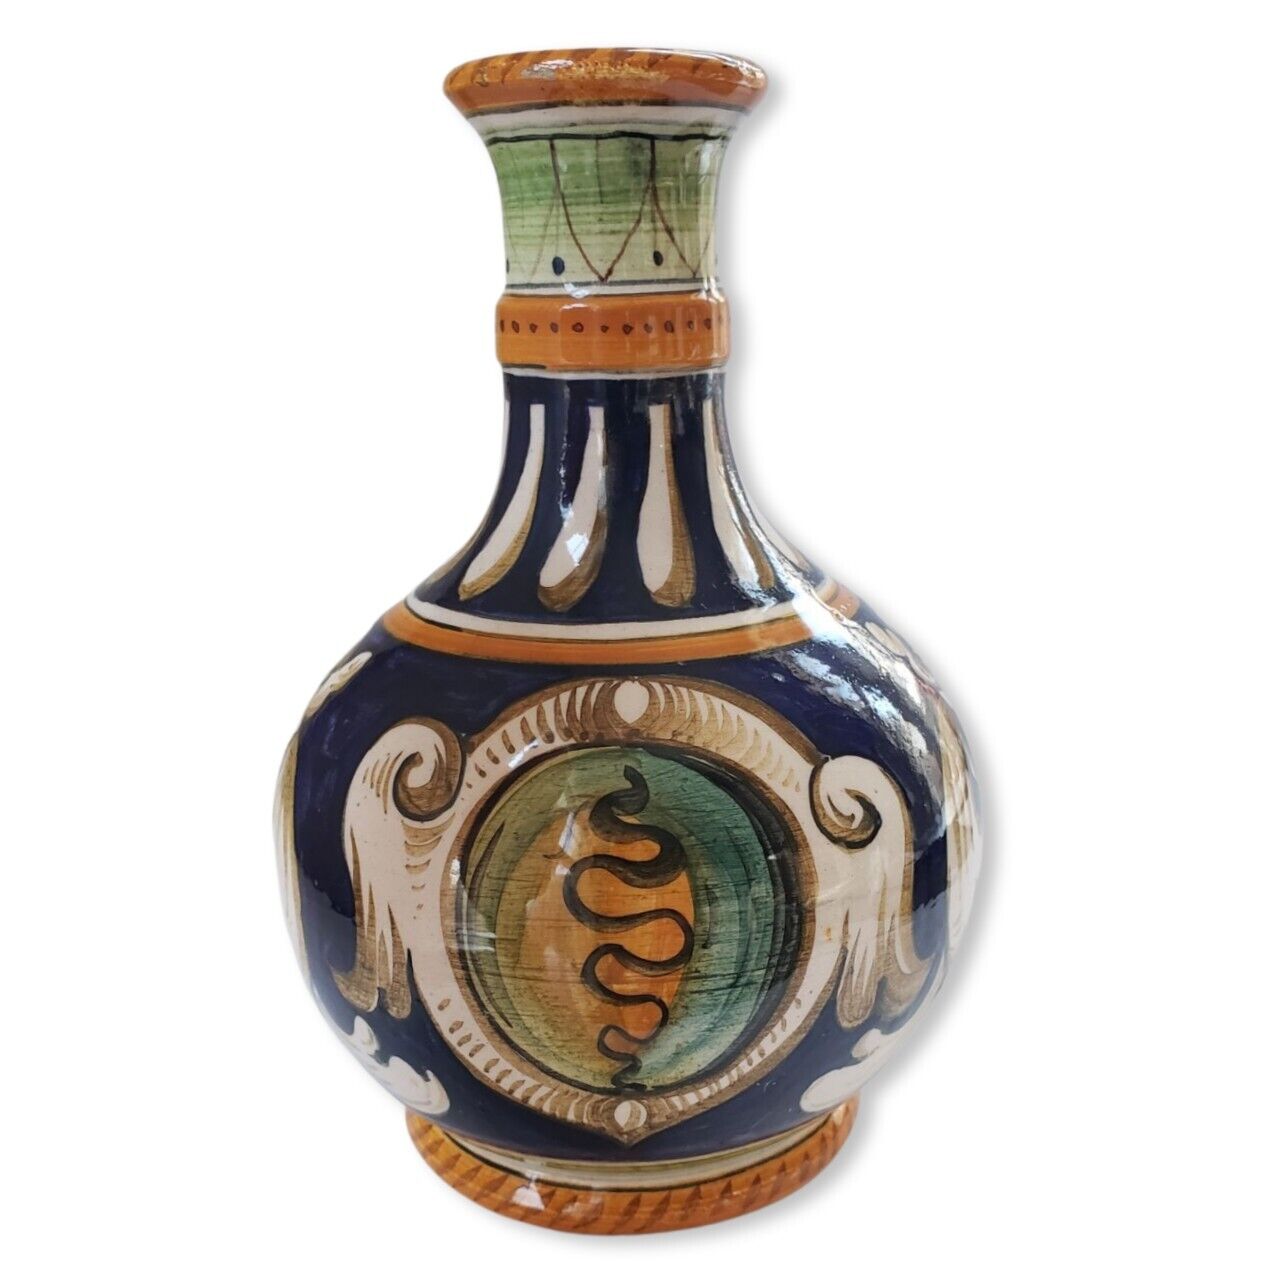 Vintage Deruta Italy Saca Castelli Pottery Vase Hand Painted Cobalt Blue Dragons